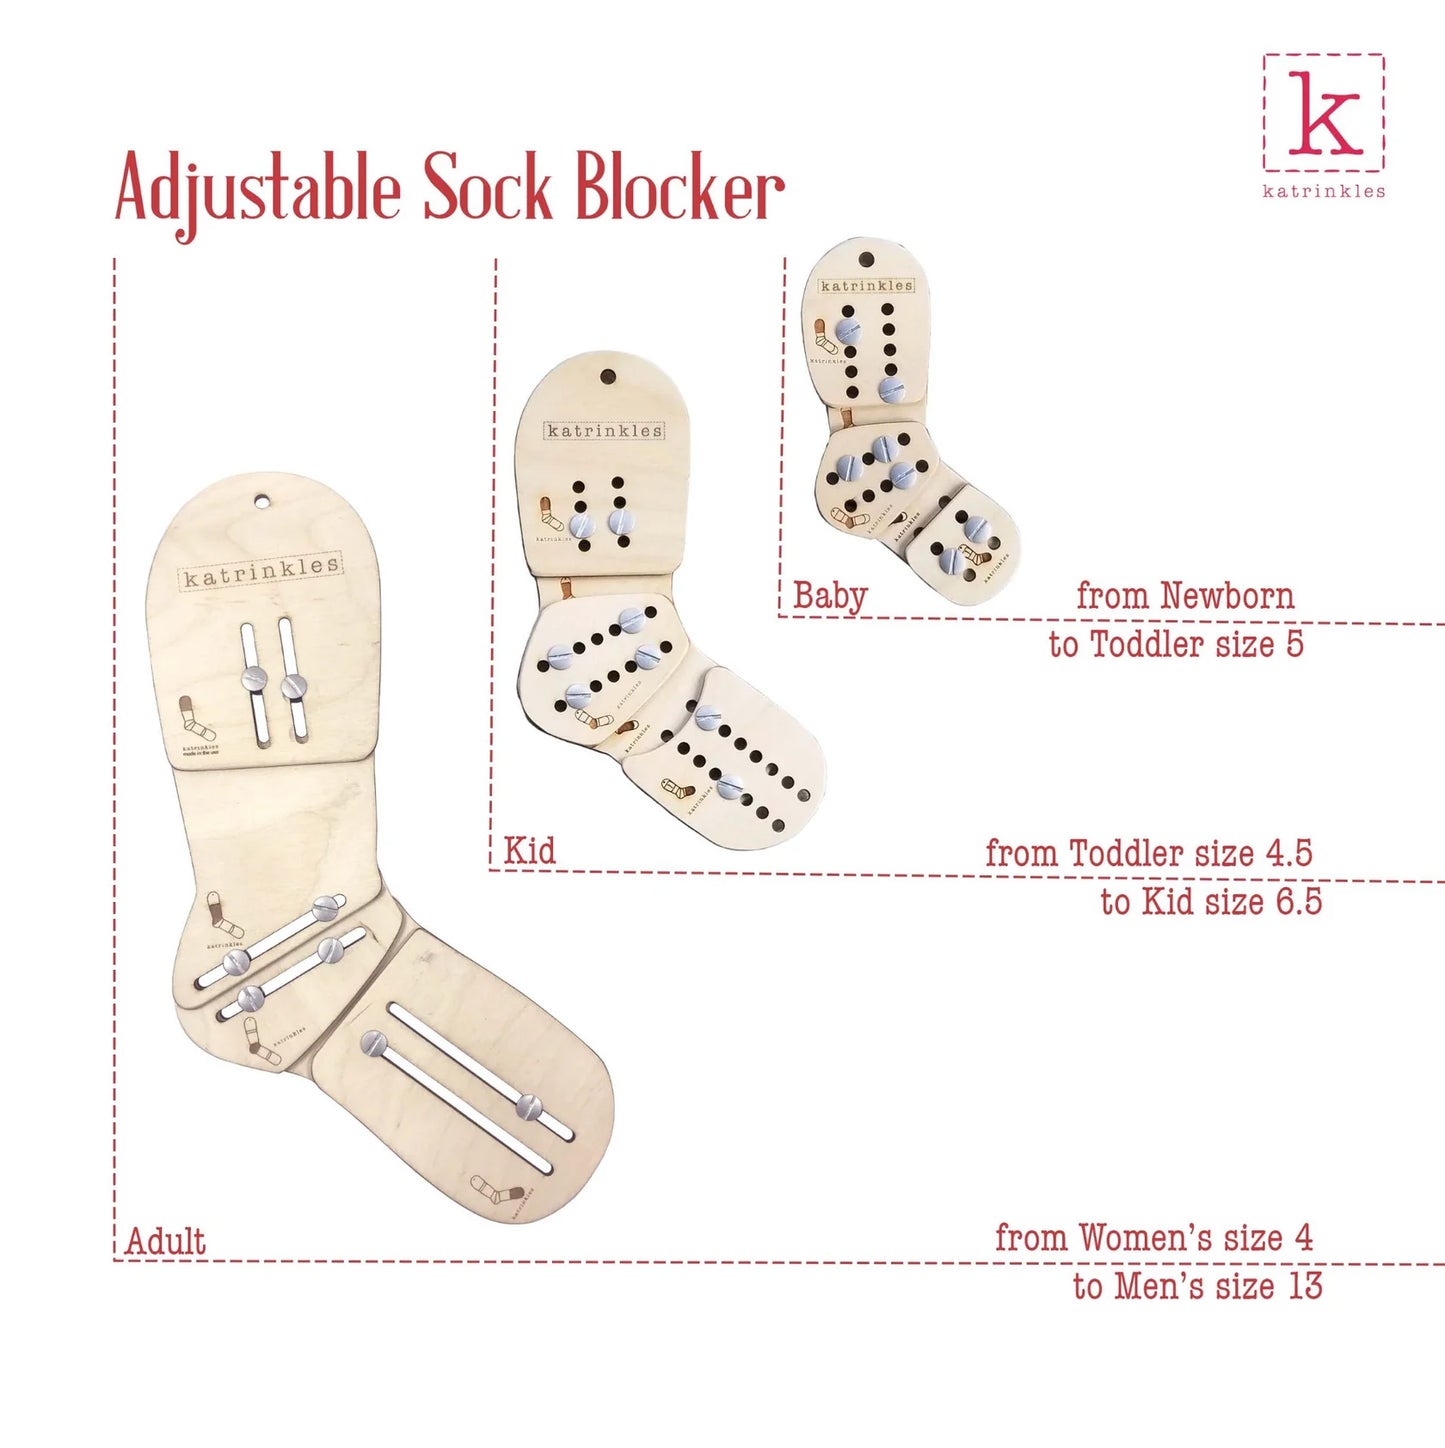 Adjustable Sock Blockers